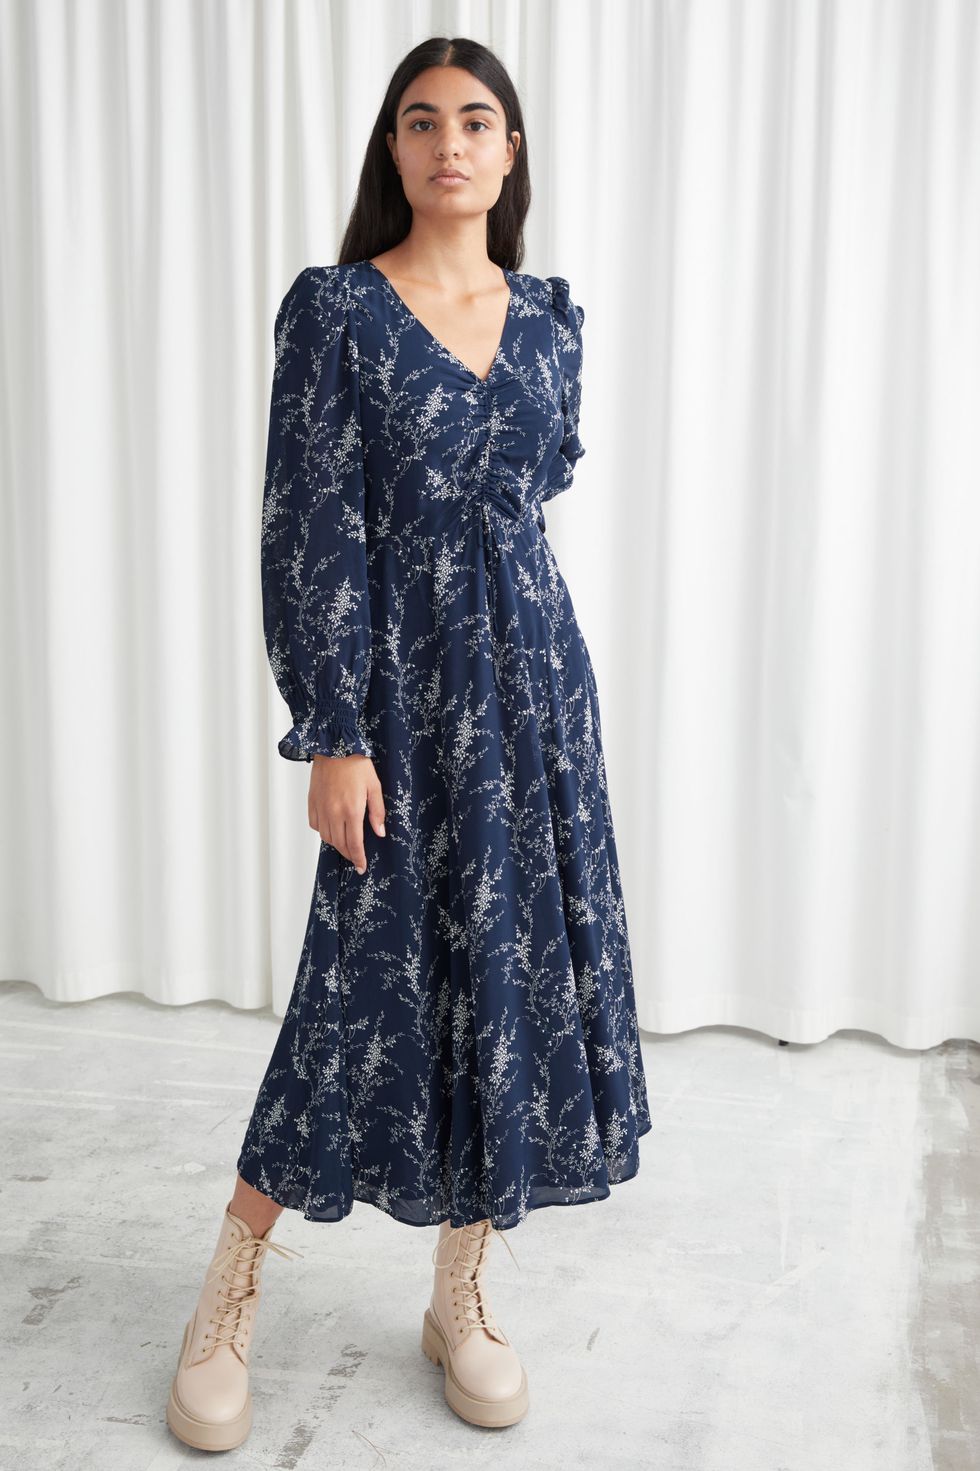 Rouched Smock Sleeve Midi Dress, £85